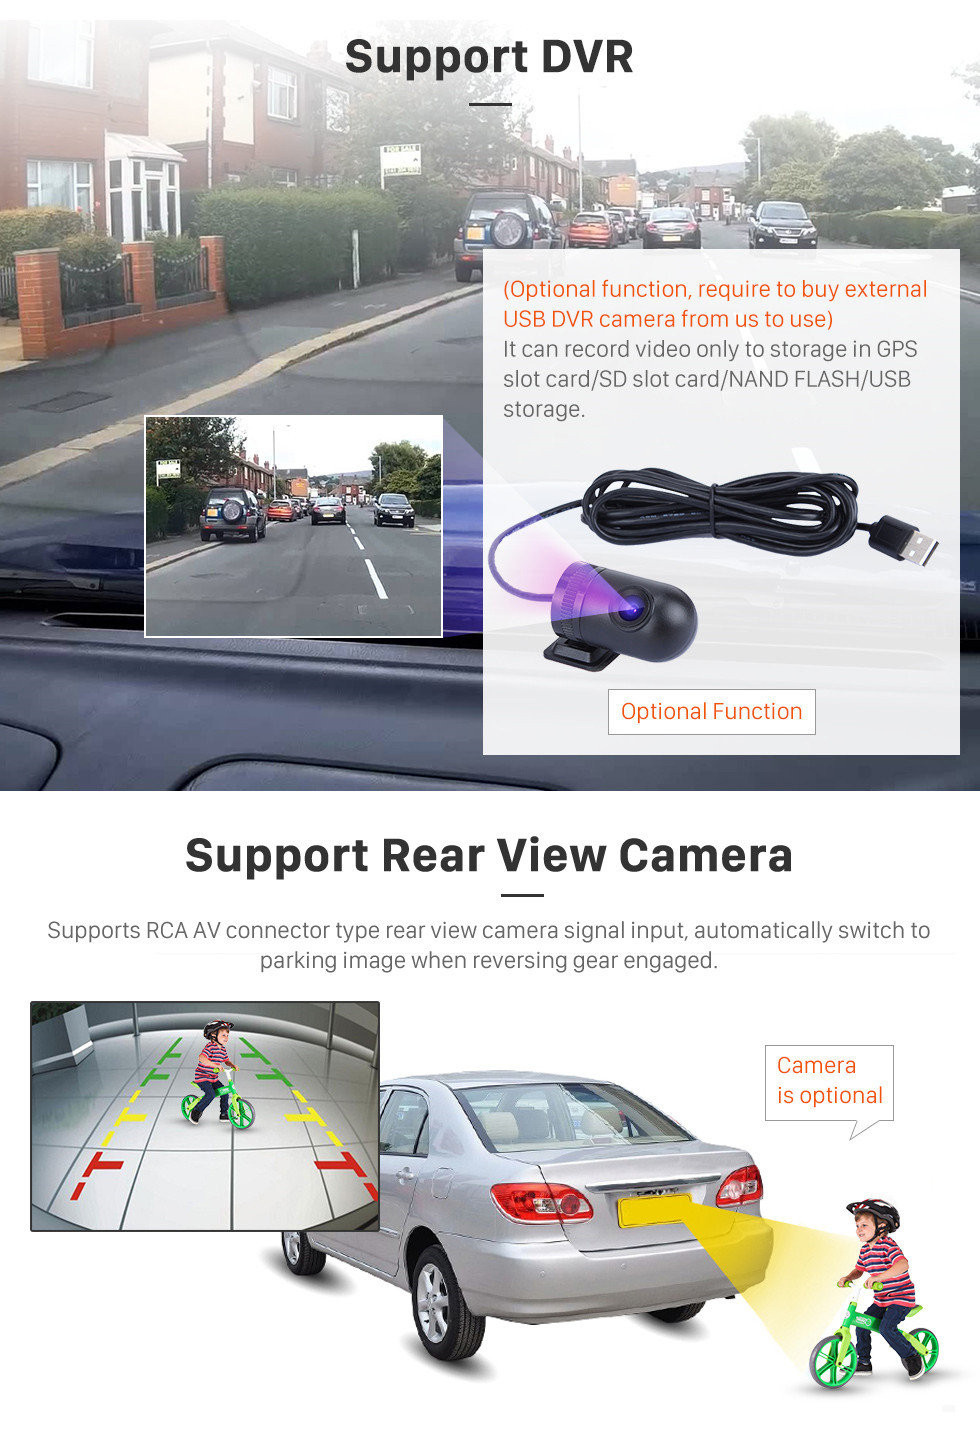 Seicane 10.1 inch 2011-2016 Nissan NAVARA/Renault Alaskan Android 11.0 Radio GPS Navigation Mirror link Touch Screen OBD2 DVR TV WIFI Bluetooth USB Carplay Rearview Camera 1080P SWC